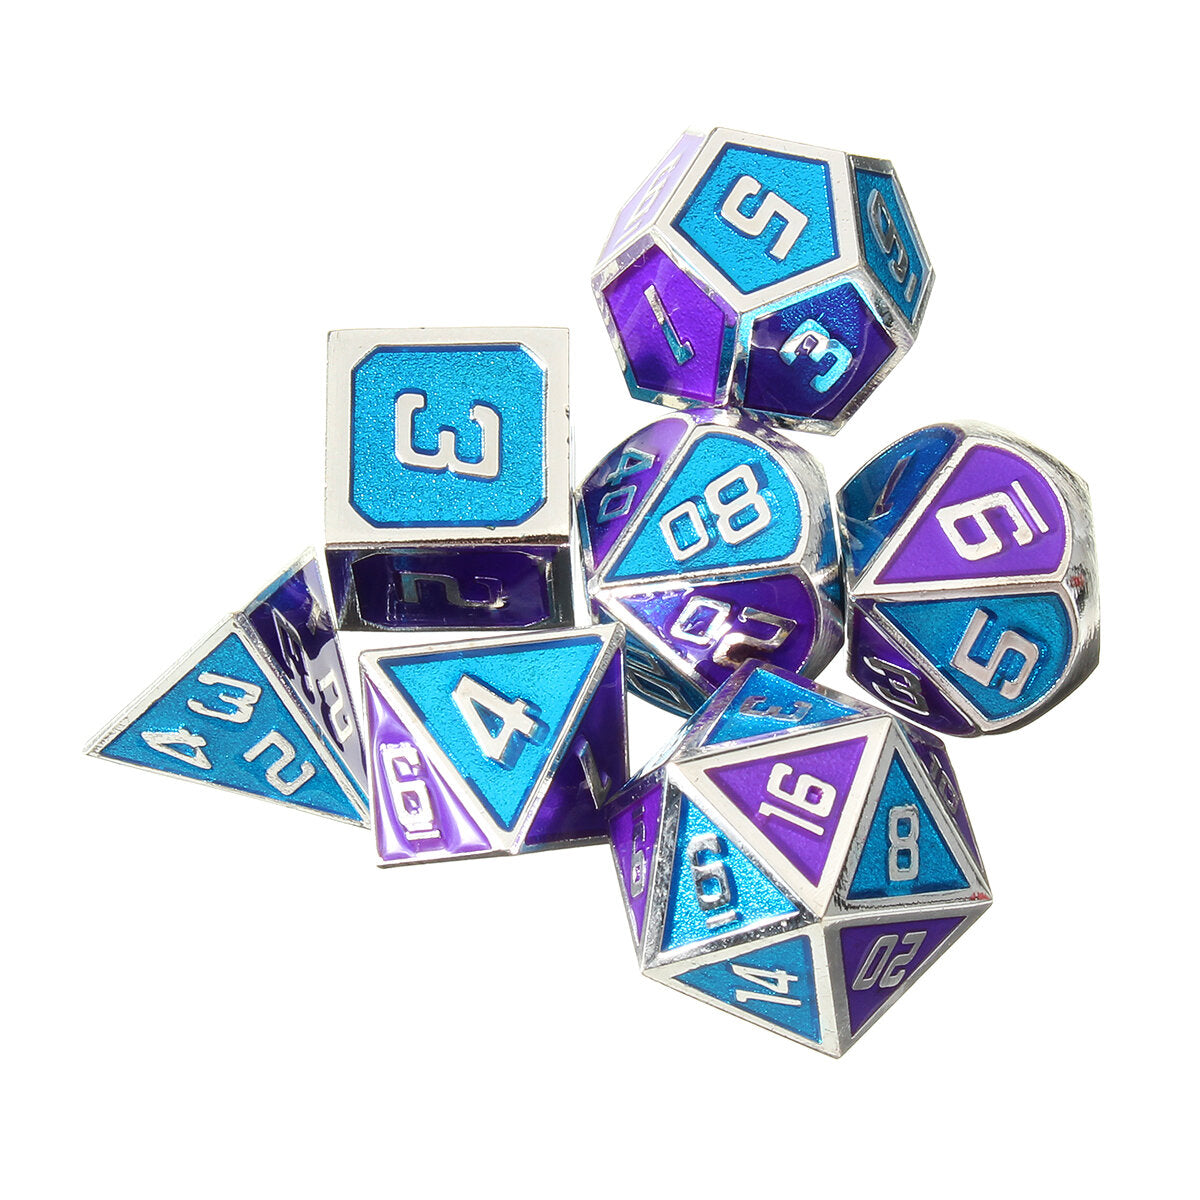 7 stuks polyhedral dices set voor dungeons dragons d20 d12 d10 d8 d6 d4 games + opbergzakjes tas